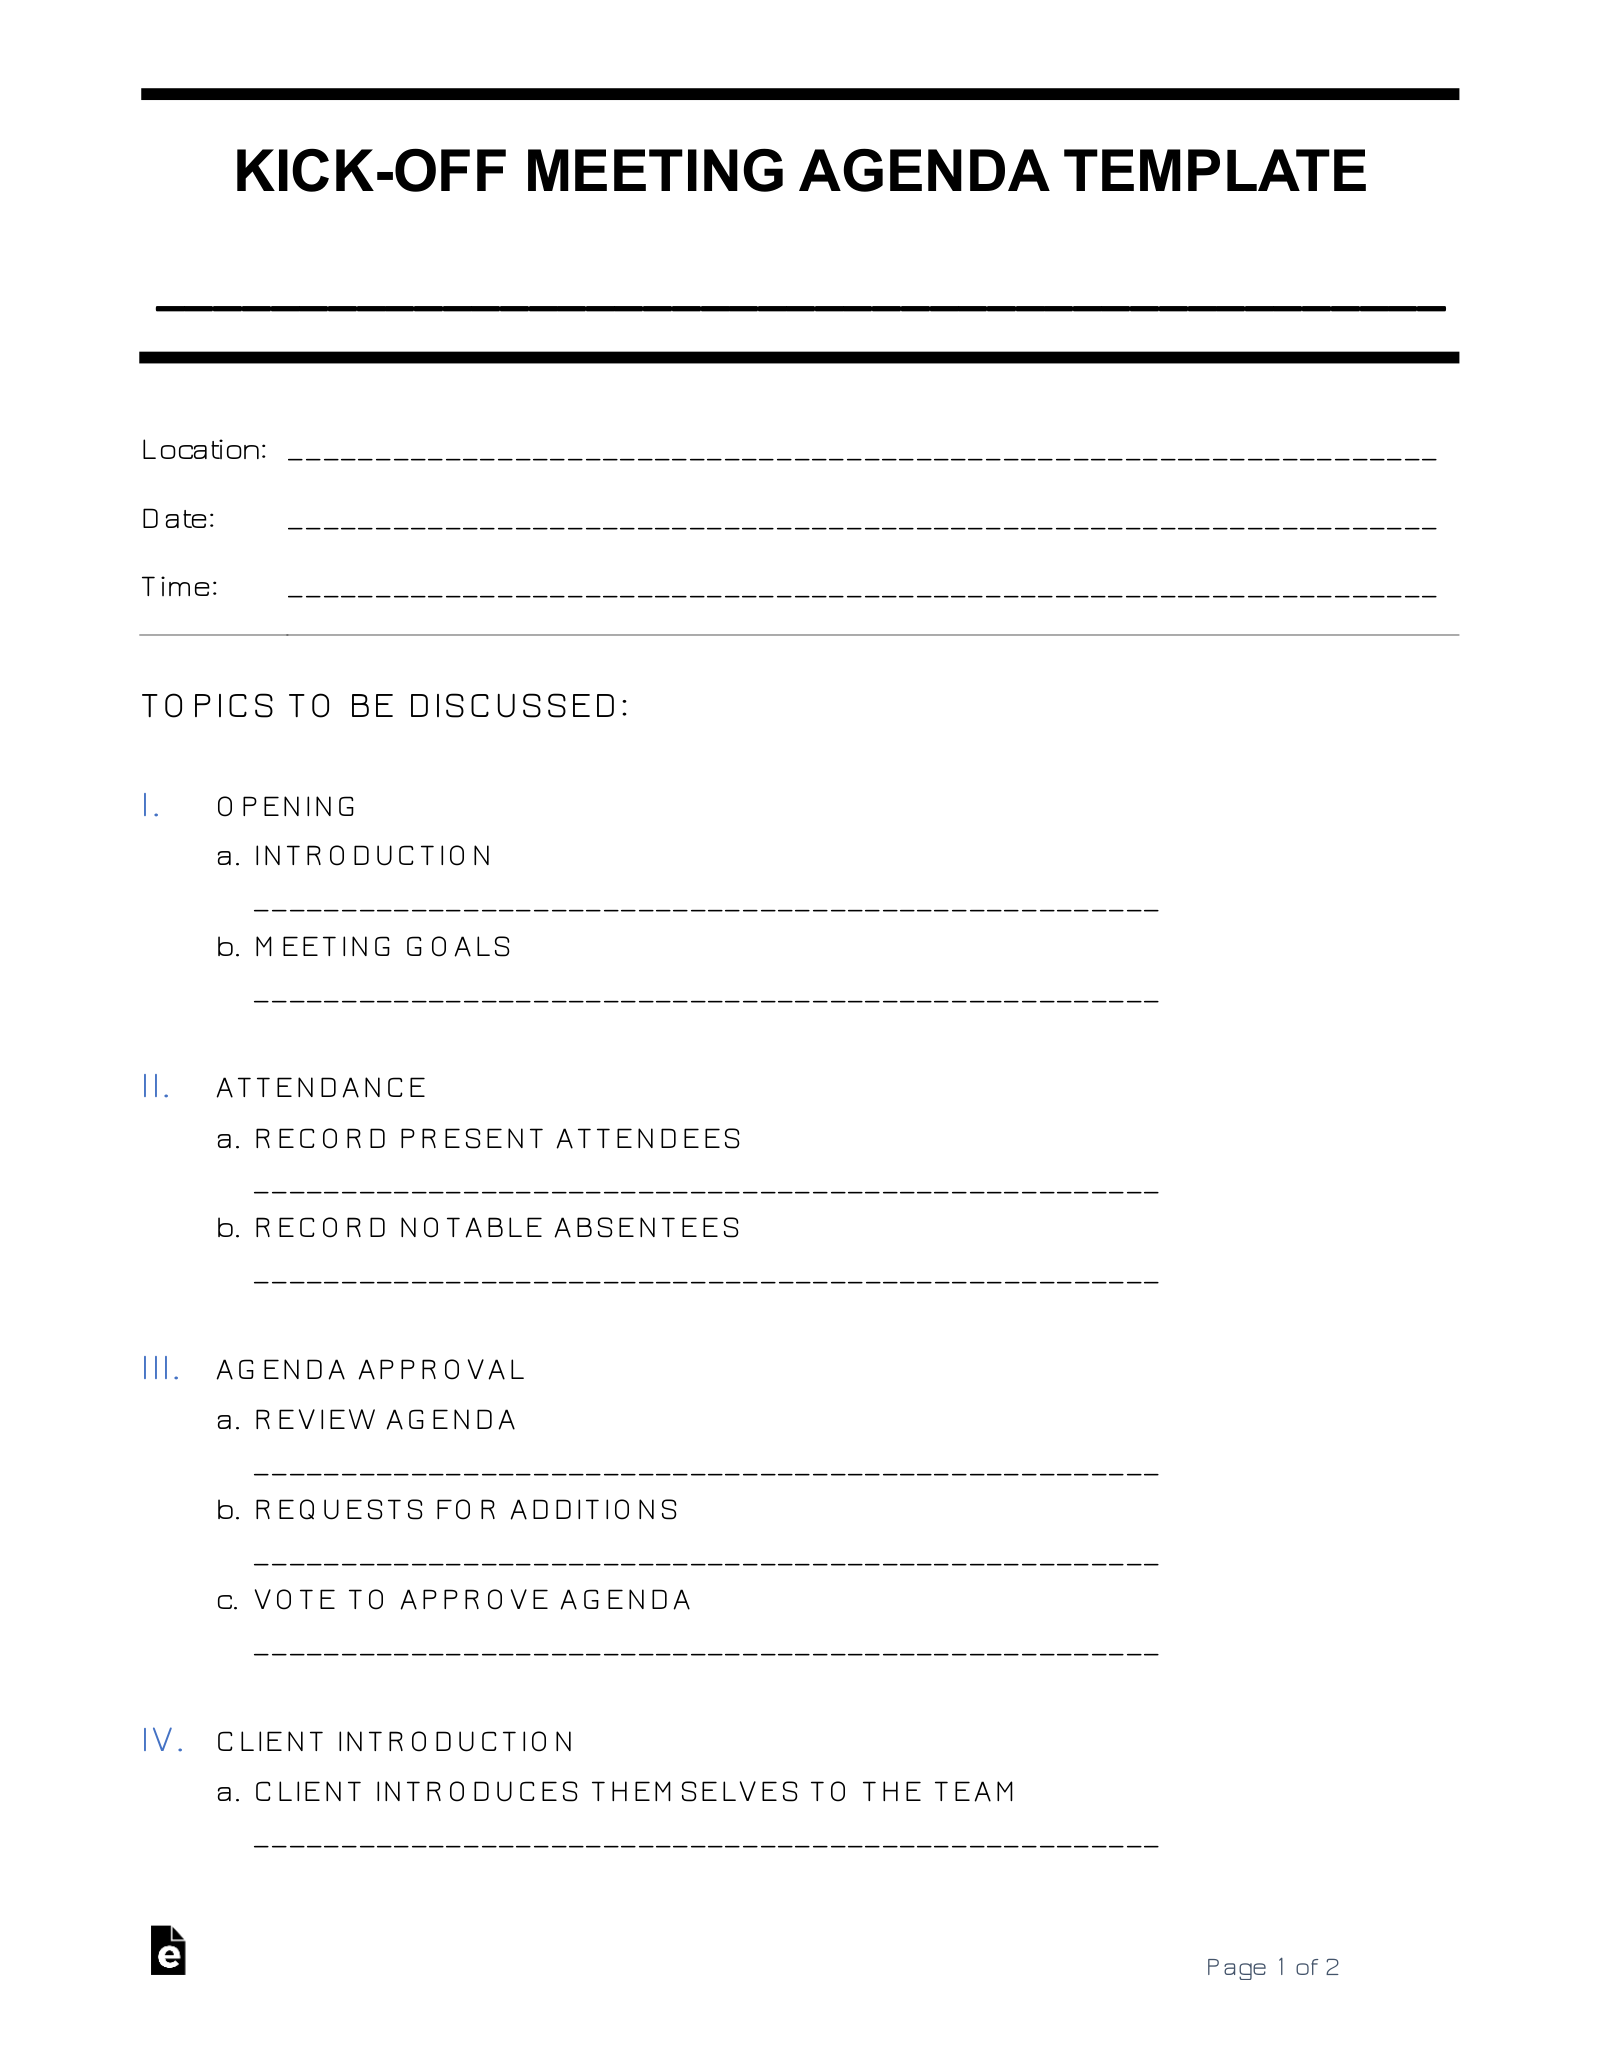 Free Kick-Off Meeting Agenda Template | Sample - PDF | Word – eForms